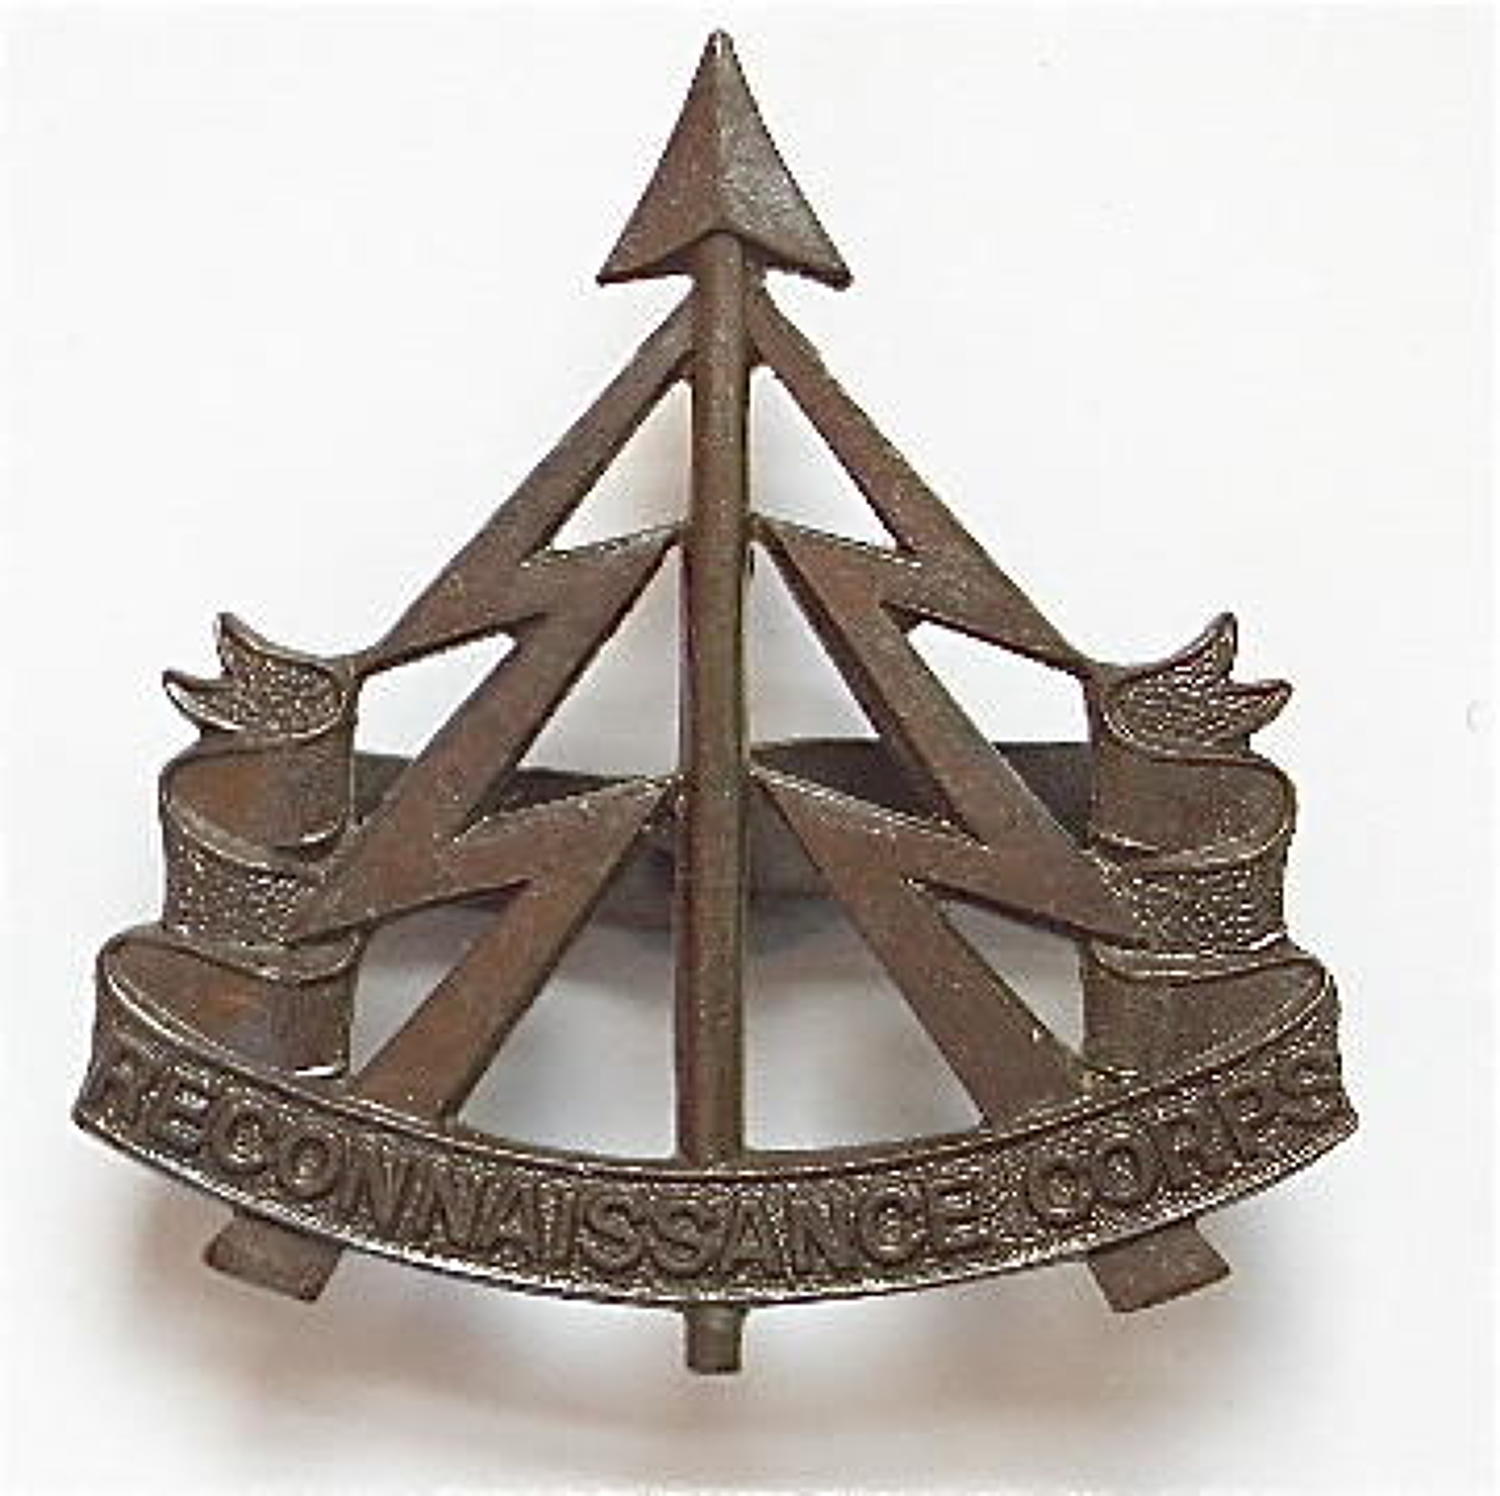 Reconnaissance Corps WW2 Officer's OSD cap badge